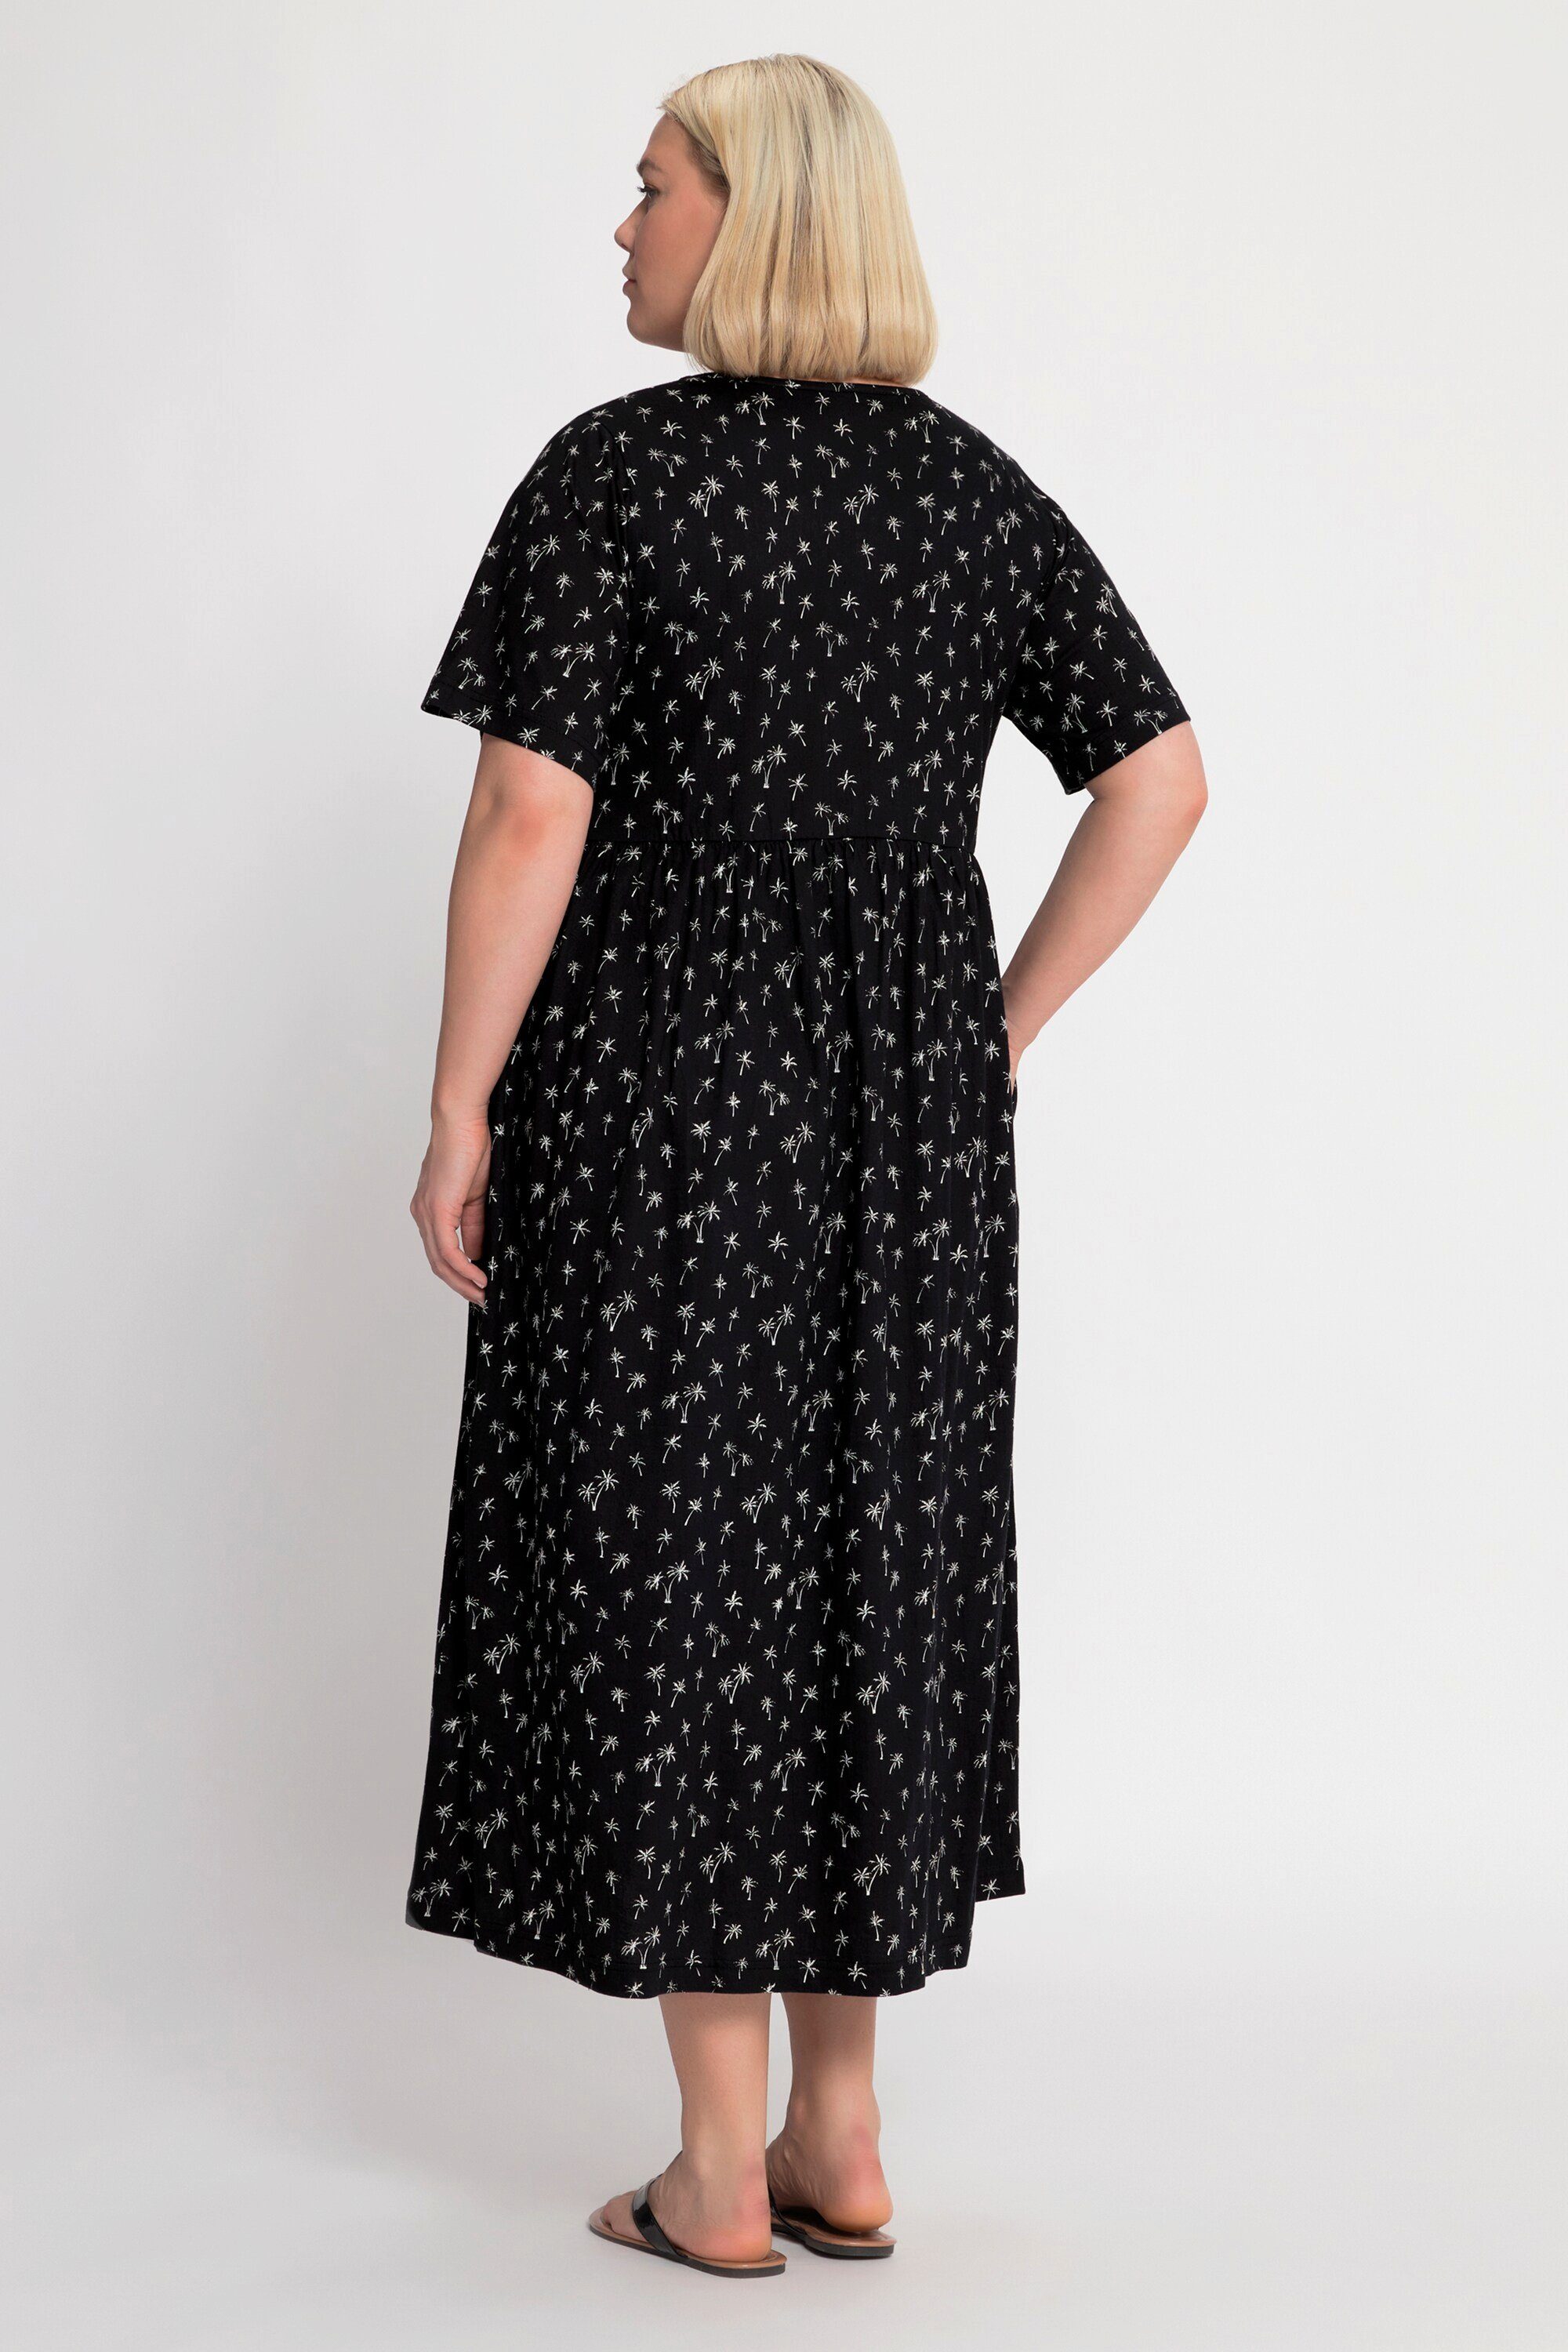 Empirenaht multicolor schwarz Popken Ulla Halbarm Jerseykleid Sommerkleid V-Ausschnitt